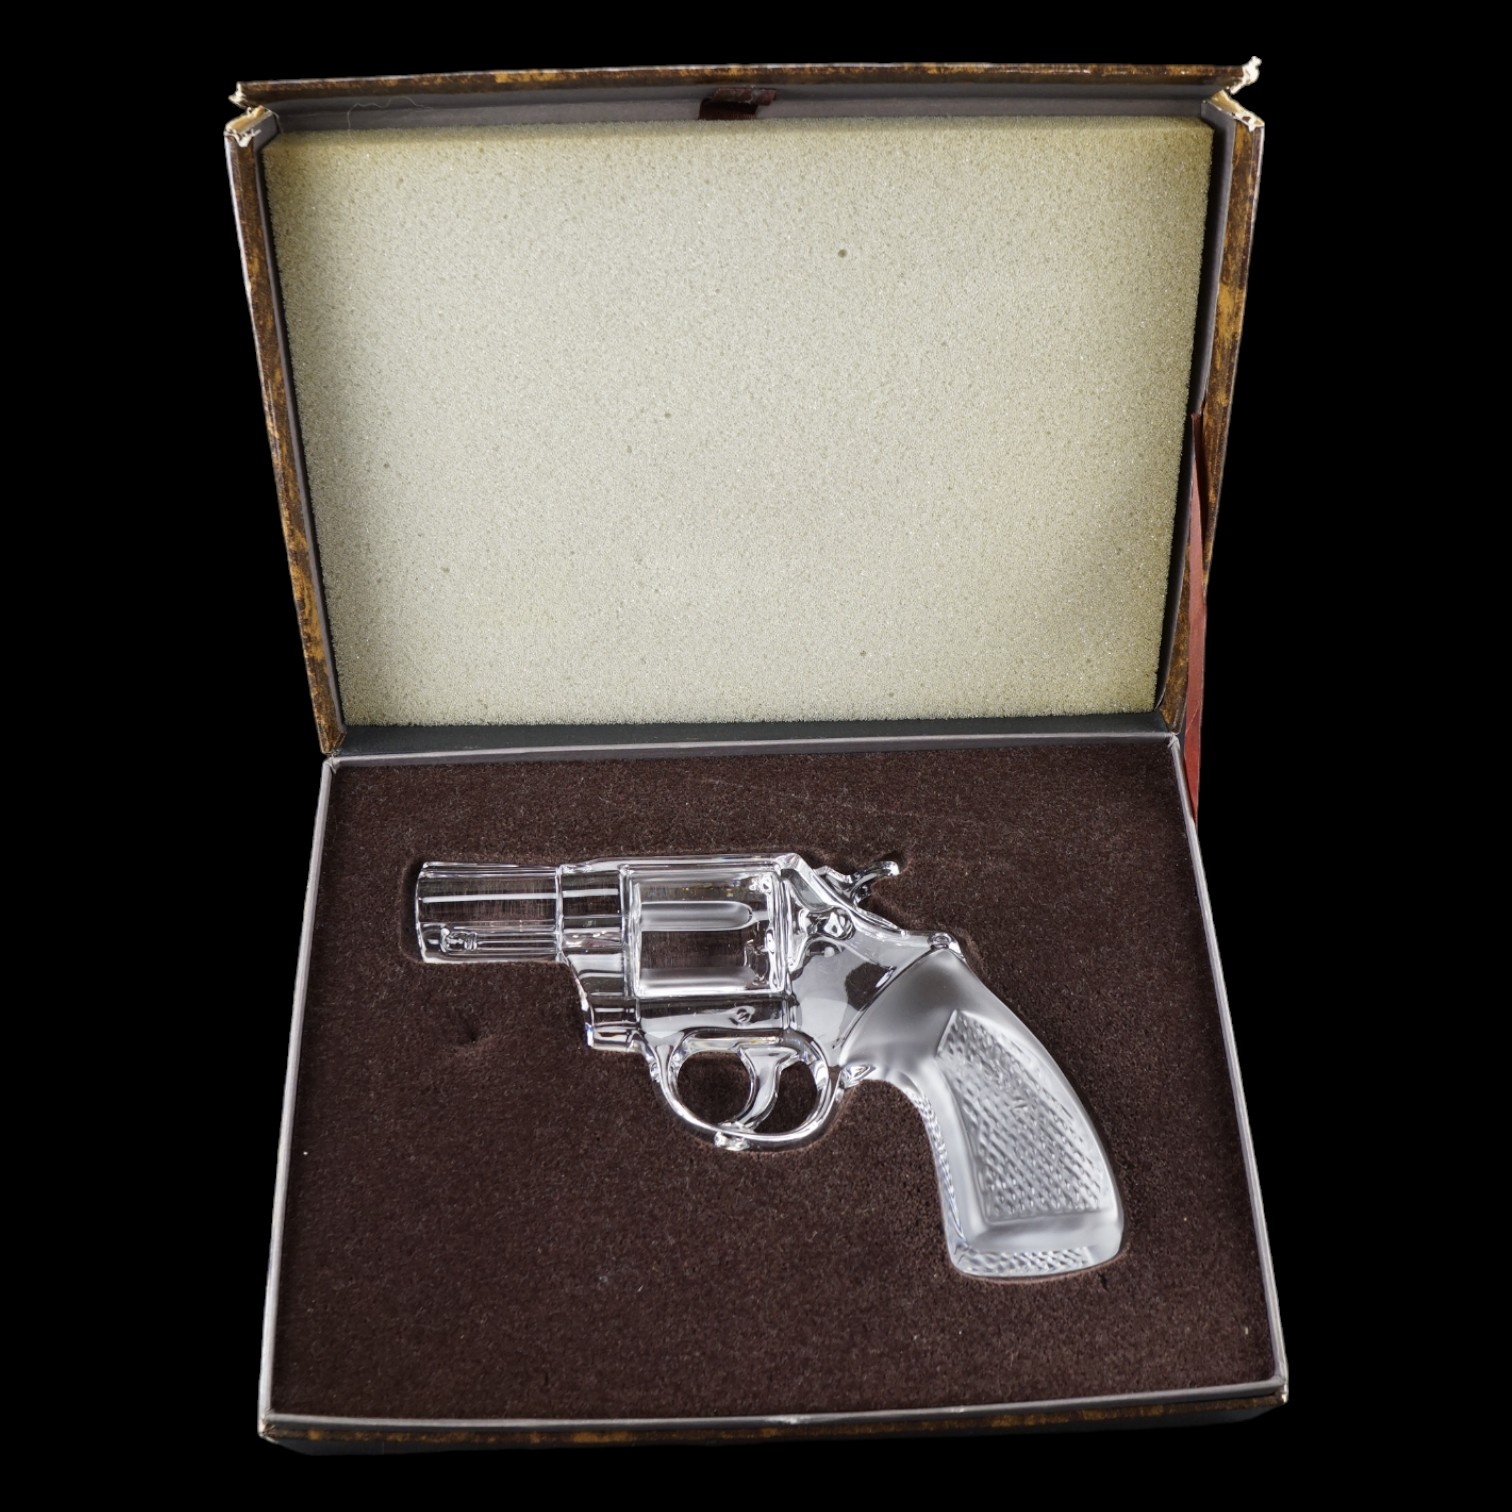 A boxed Royales De Champagne Les Armes snub-nose Smith & Wesson or similar revolver, gun 19.5 cm